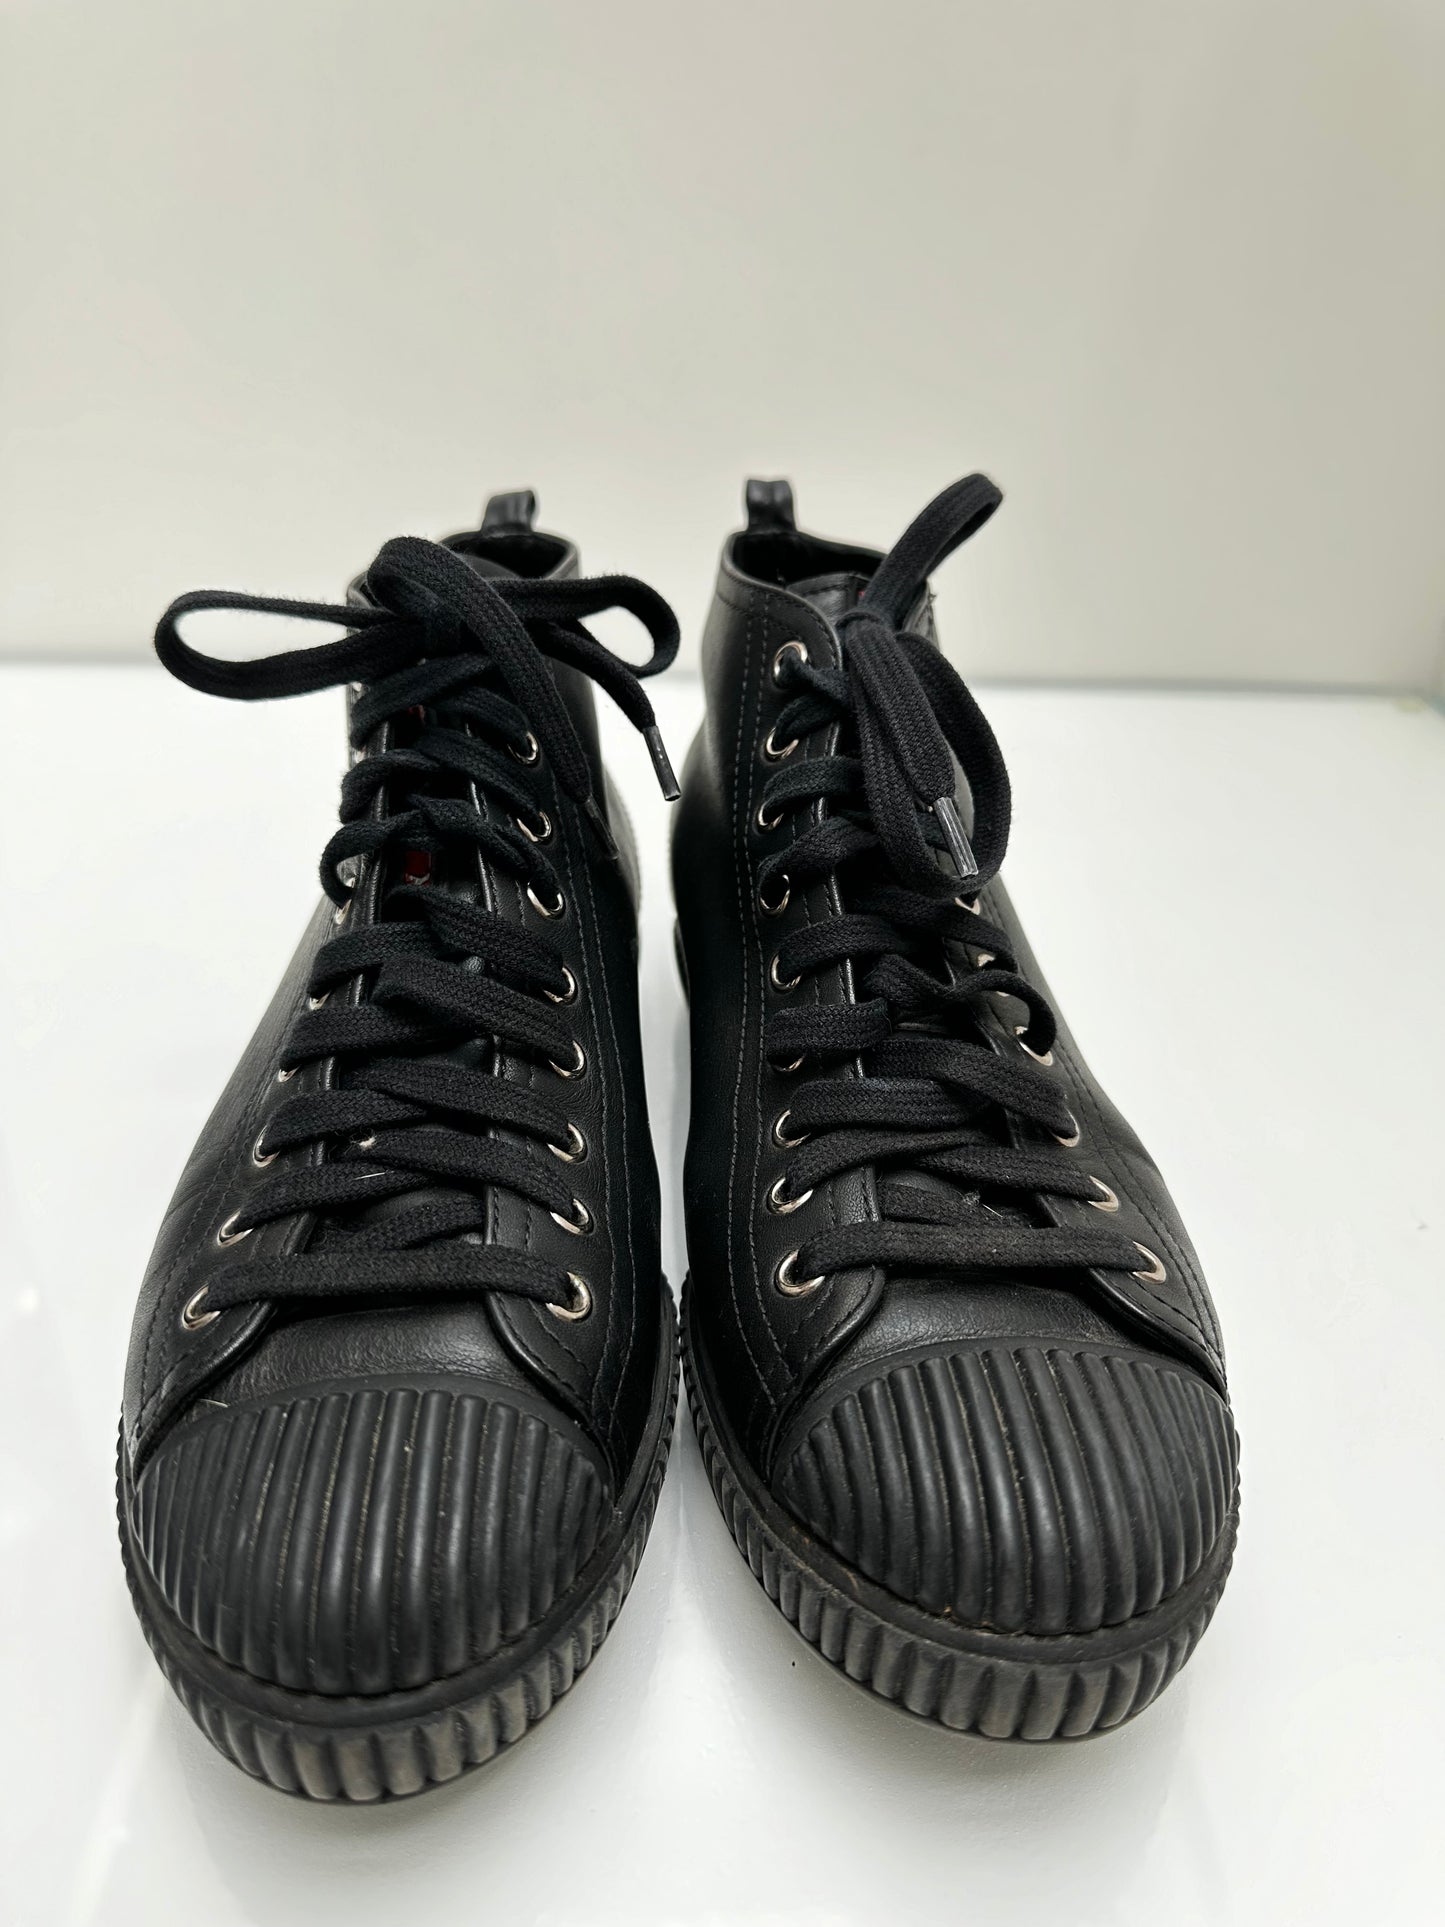 Prada Black Leather High Top Sneakers, 38